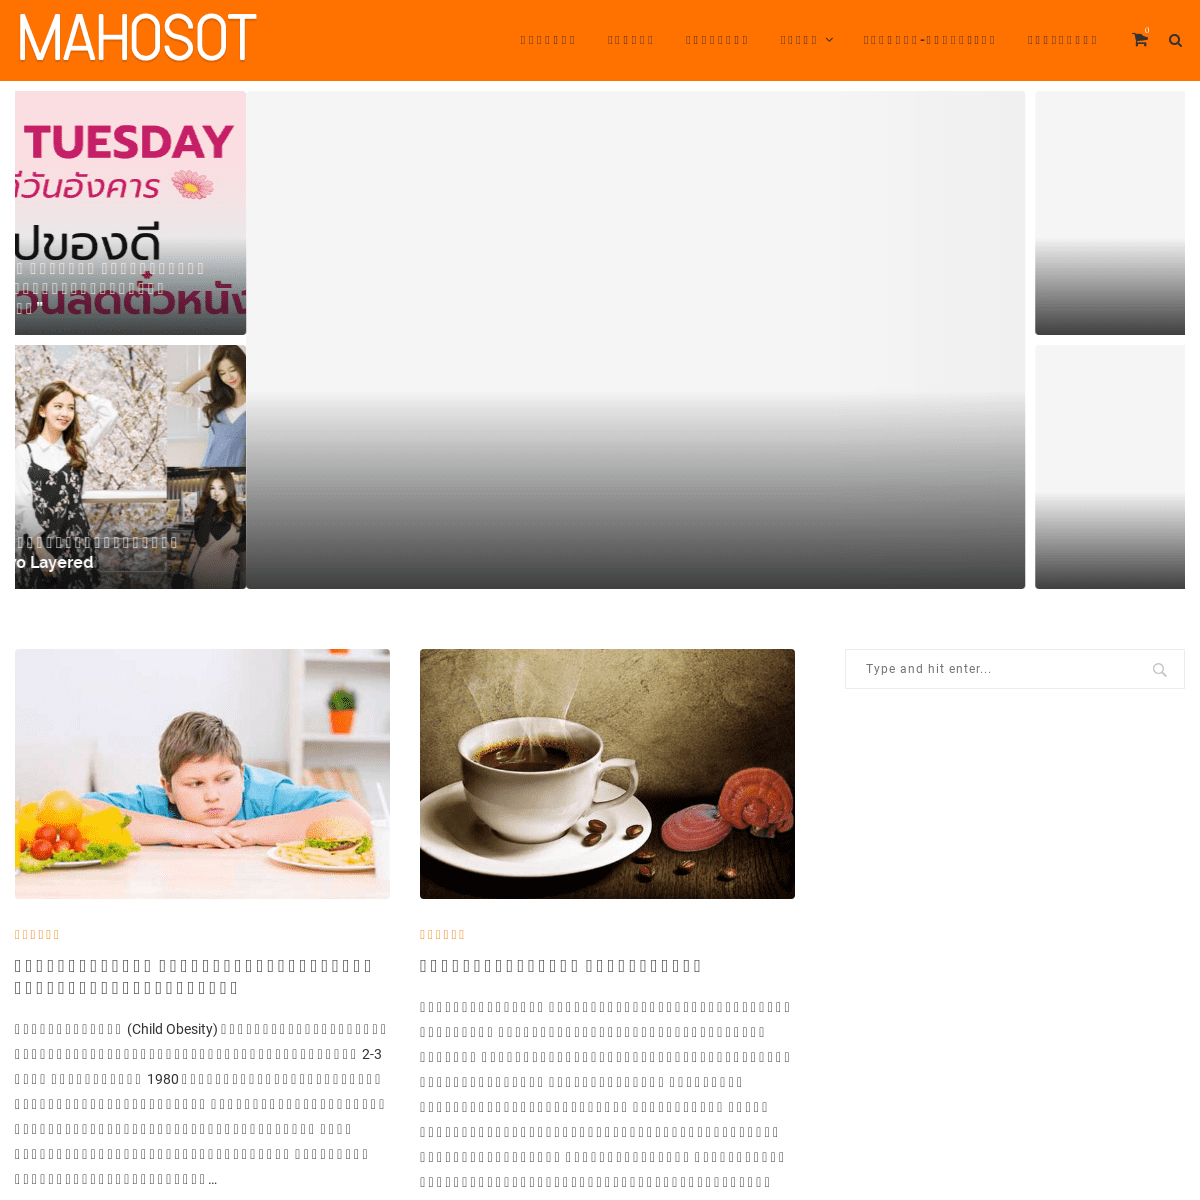 A complete backup of mahosot.com